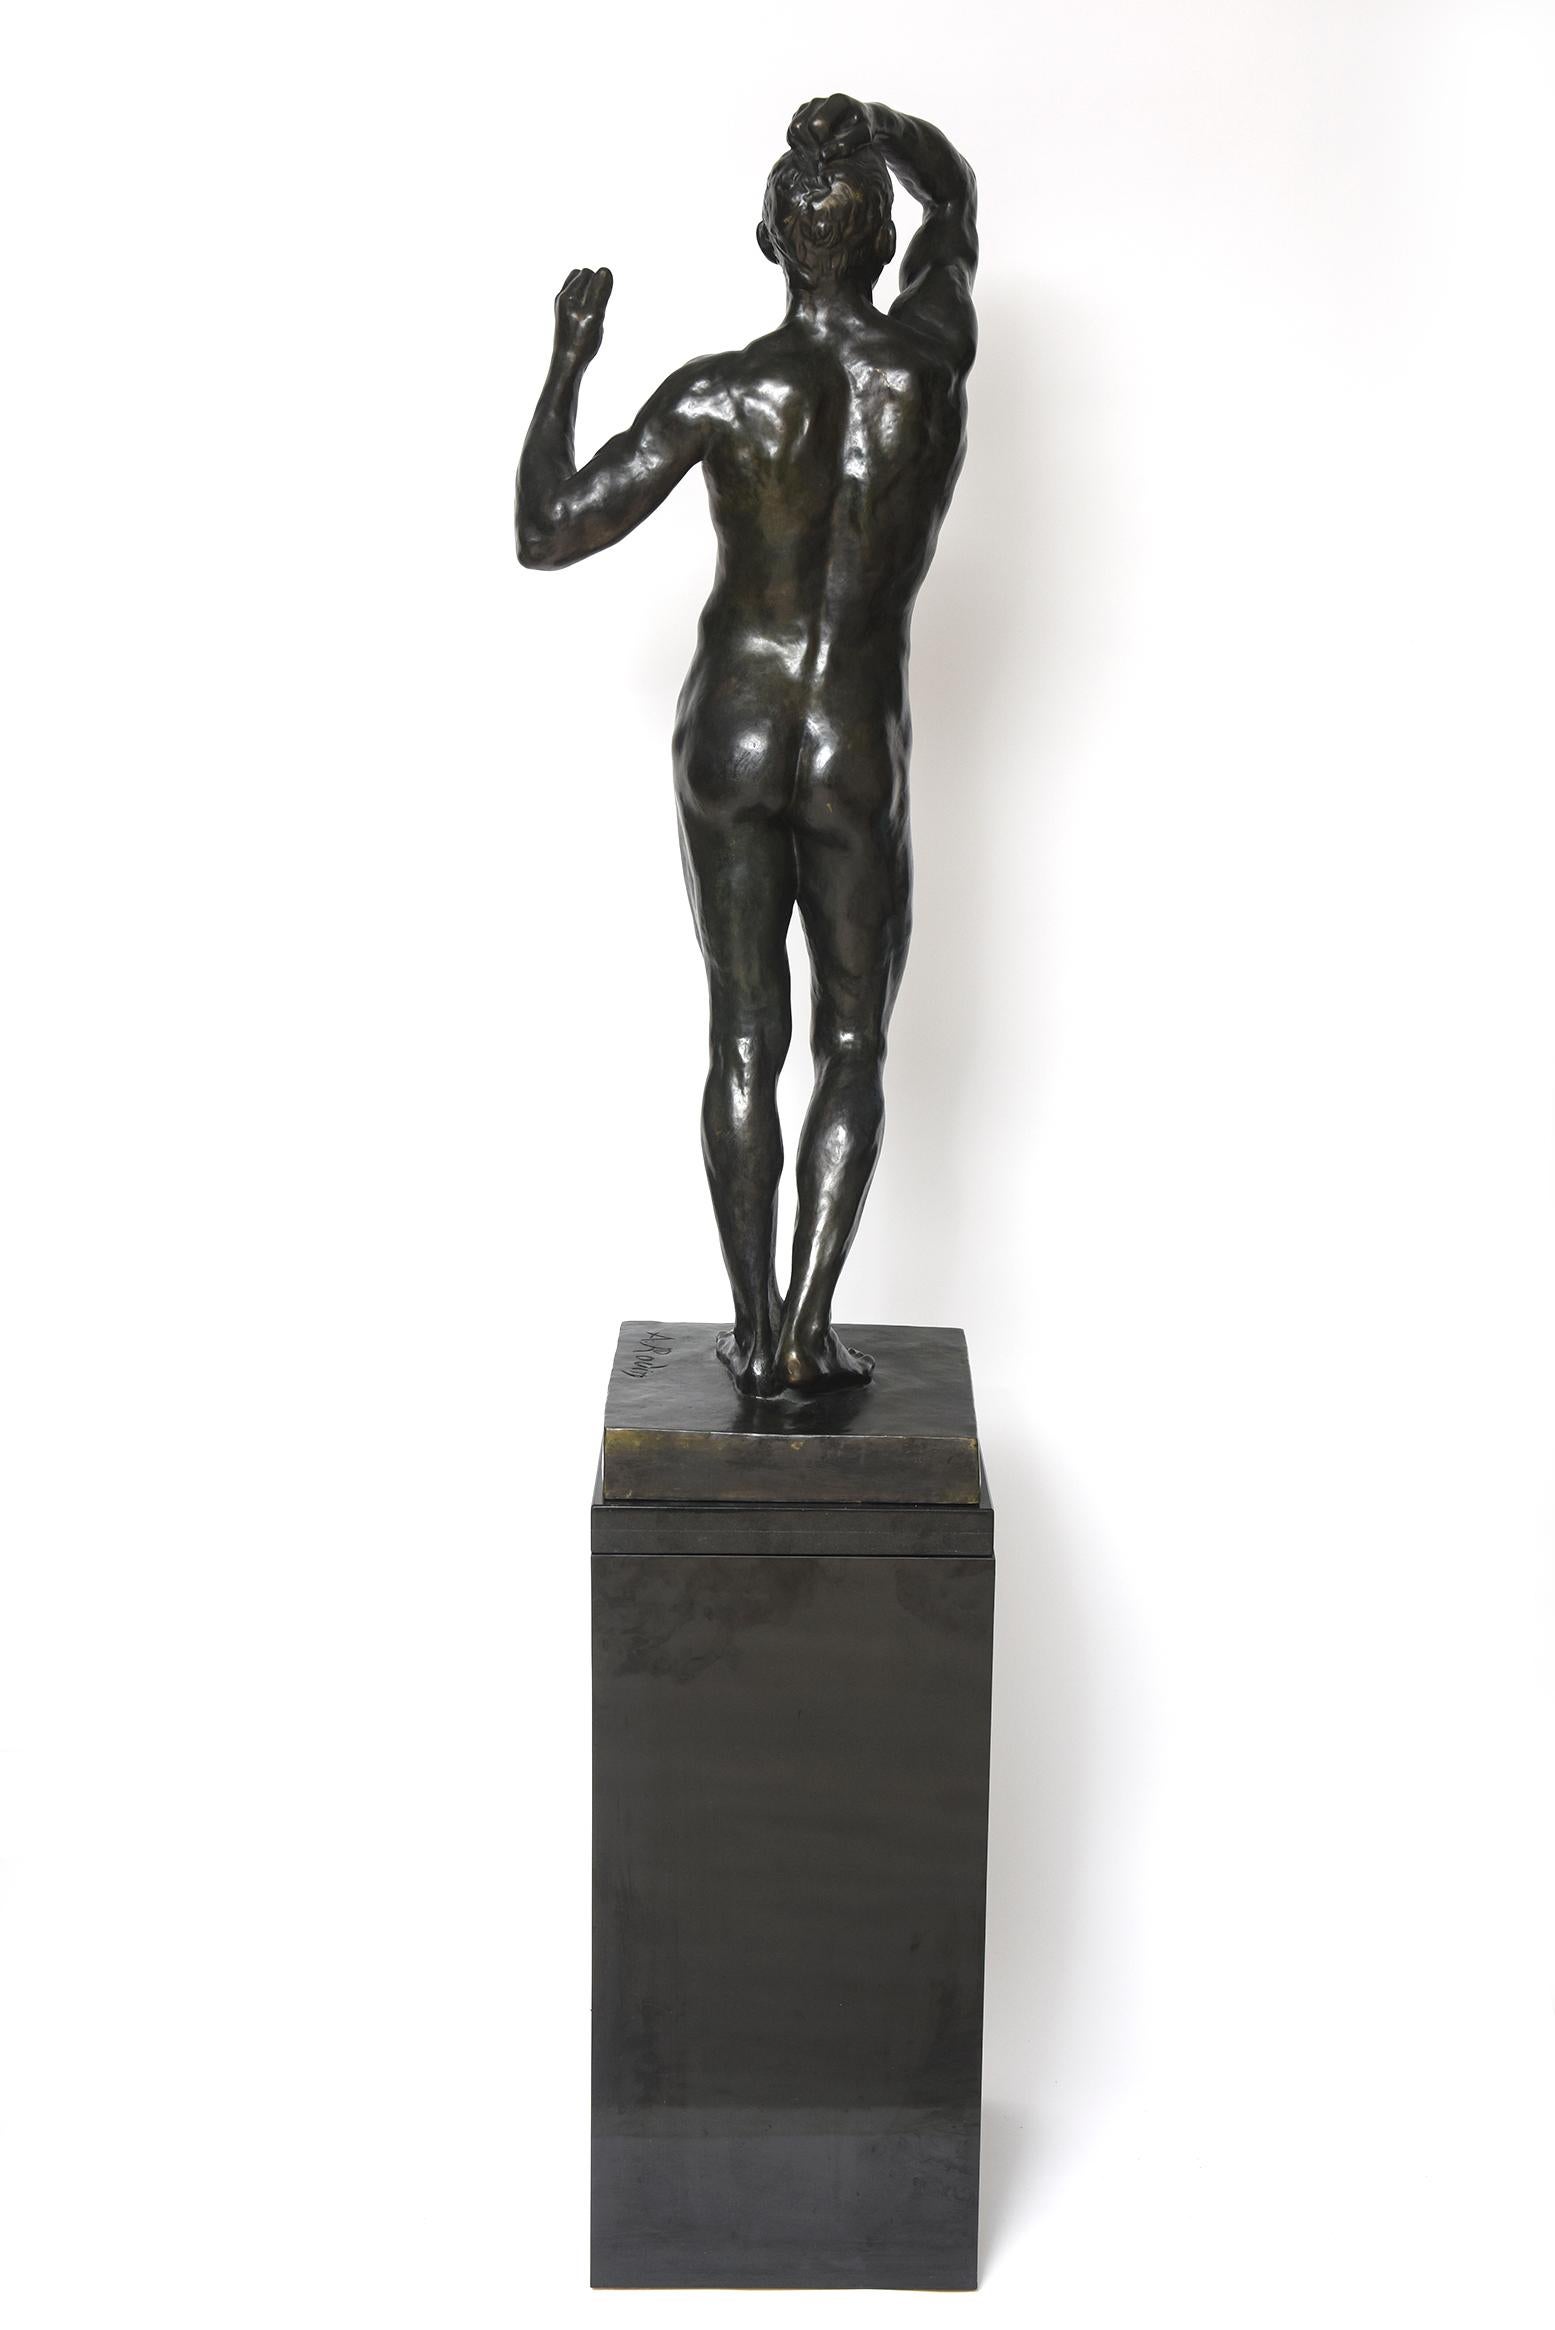 Cast After Auguste Rodin Bronze Sculpture of the Age of Bronze Male Nude Figure